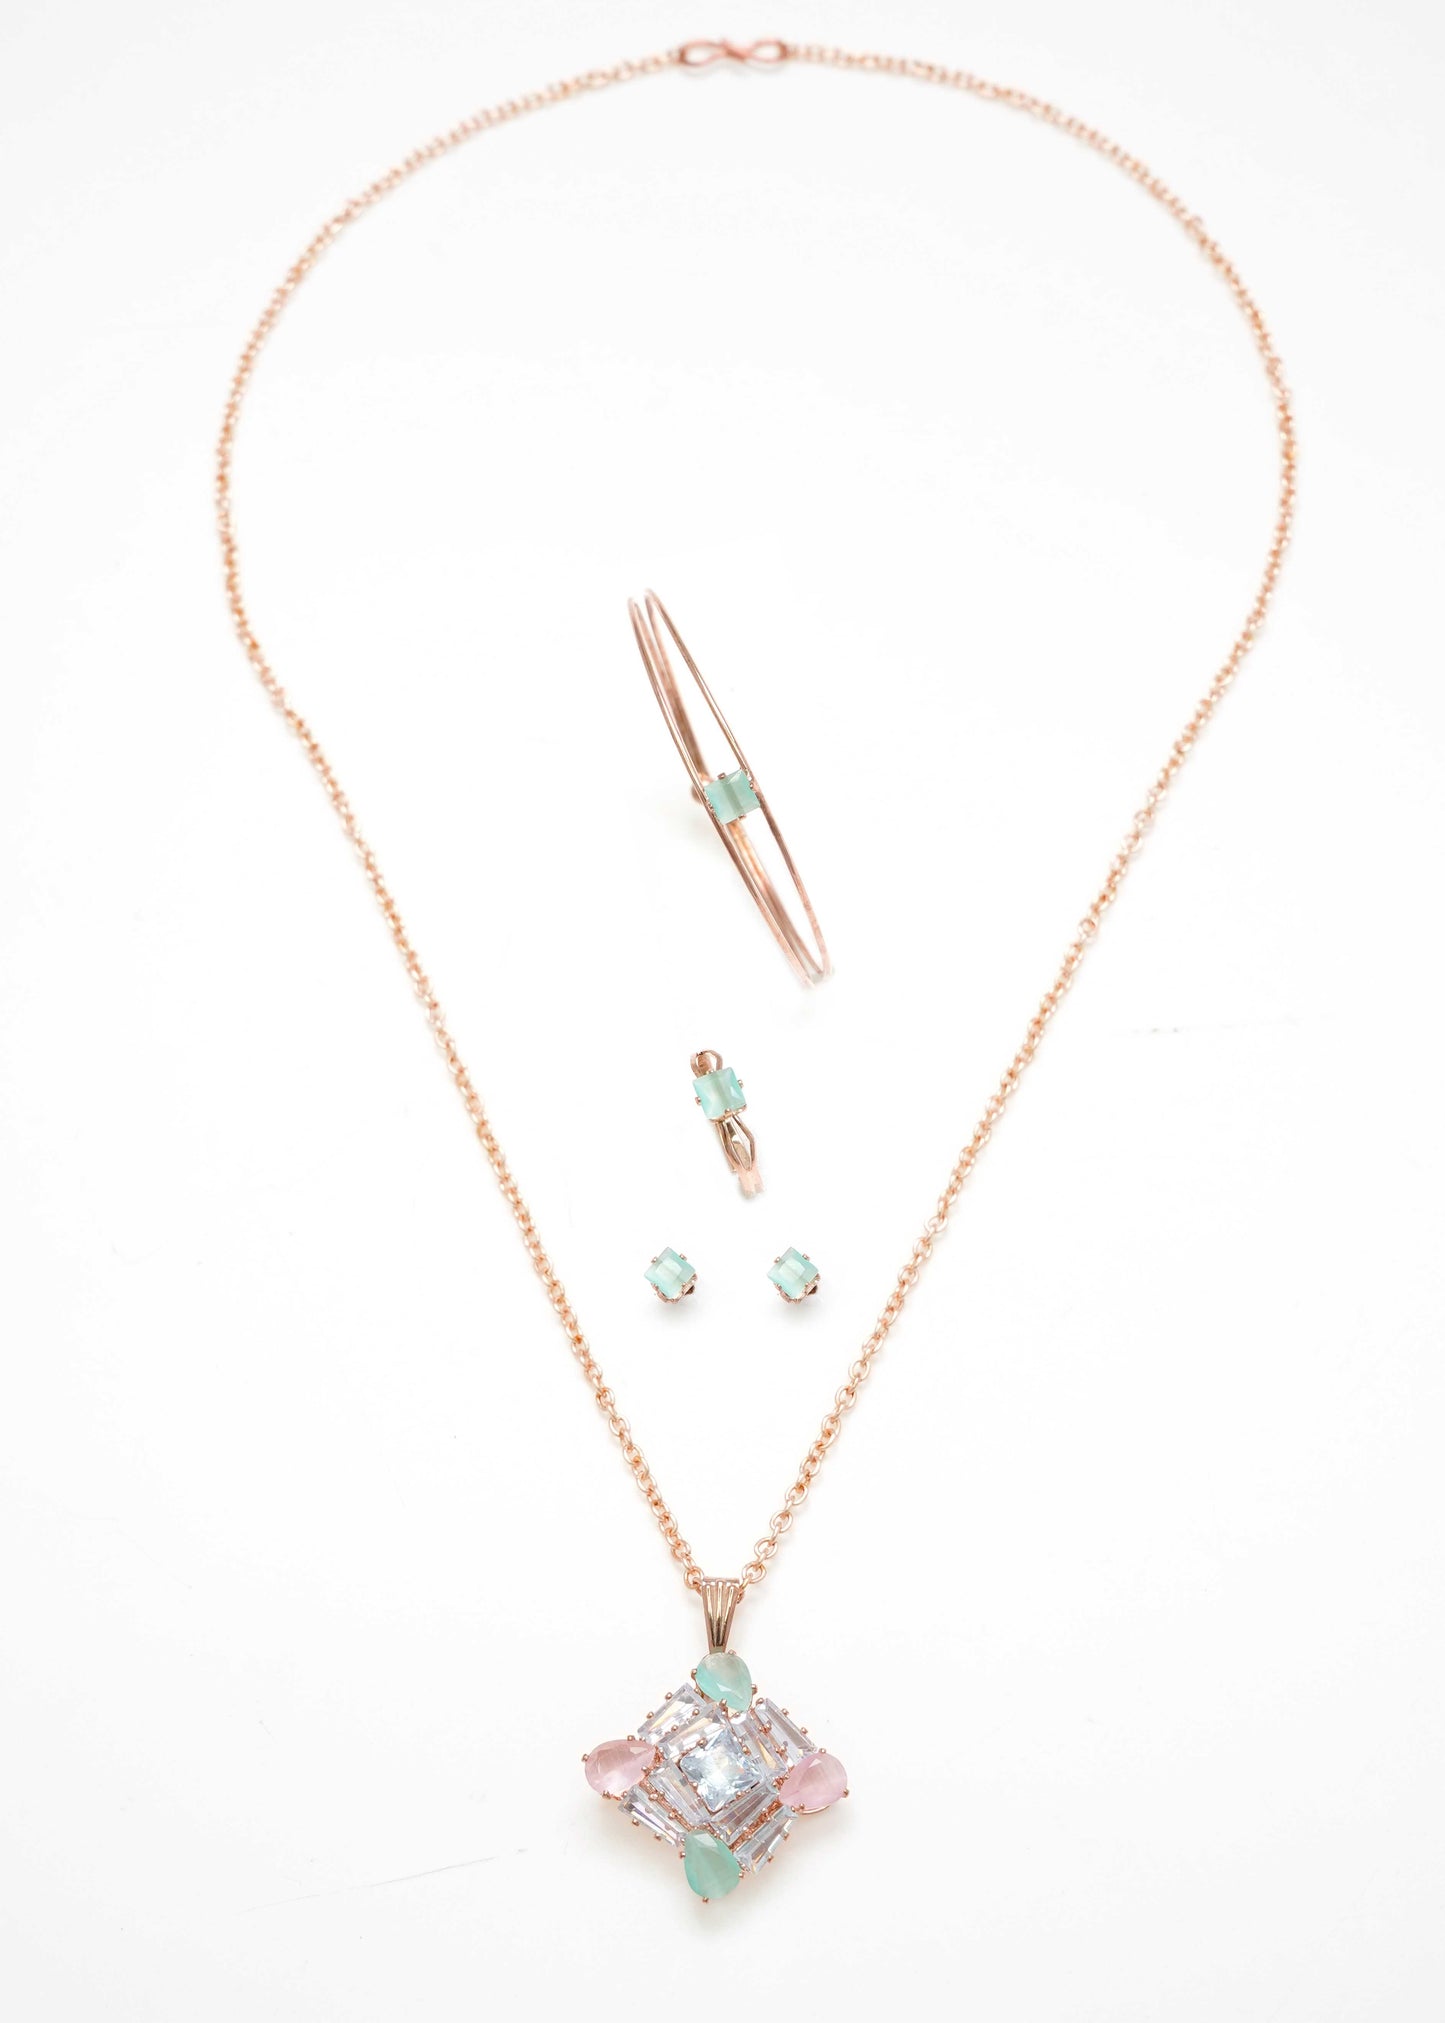 Diamond Studs Necklace Set: Elegant Beauty for Women and Girls!